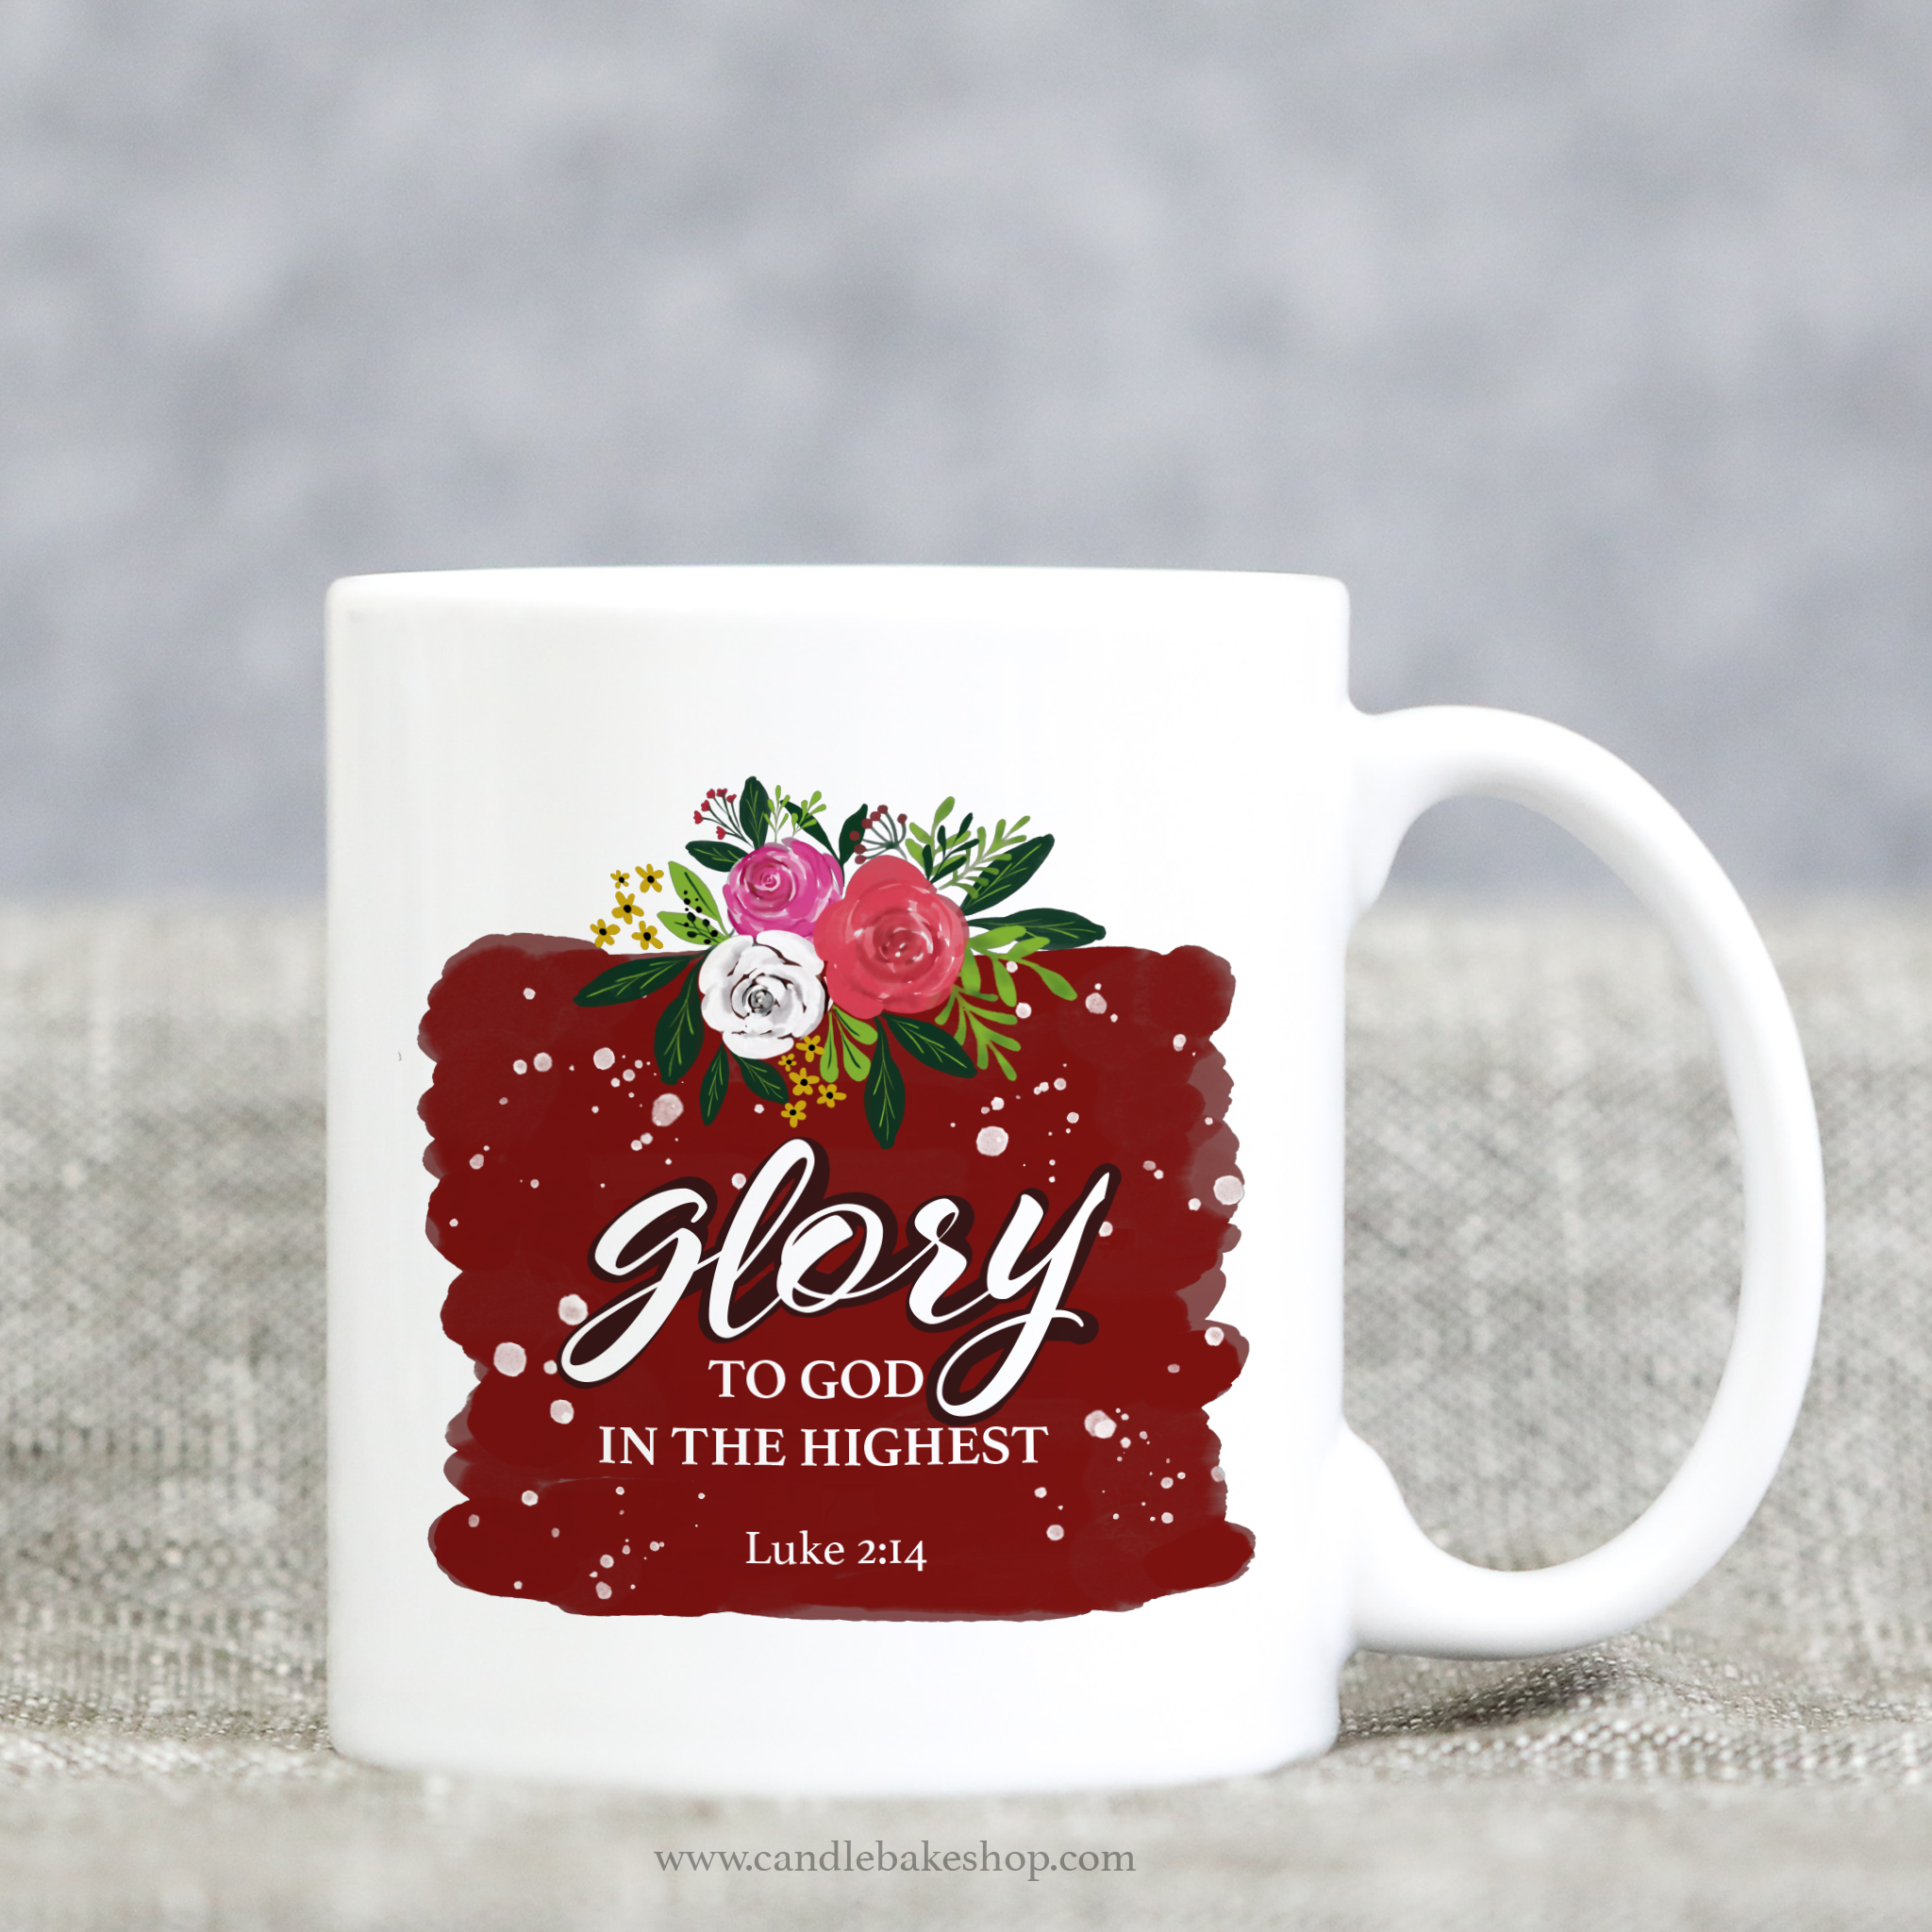 Glory To God In The Highest - Scripture Christmas Mug - Luke 2:14